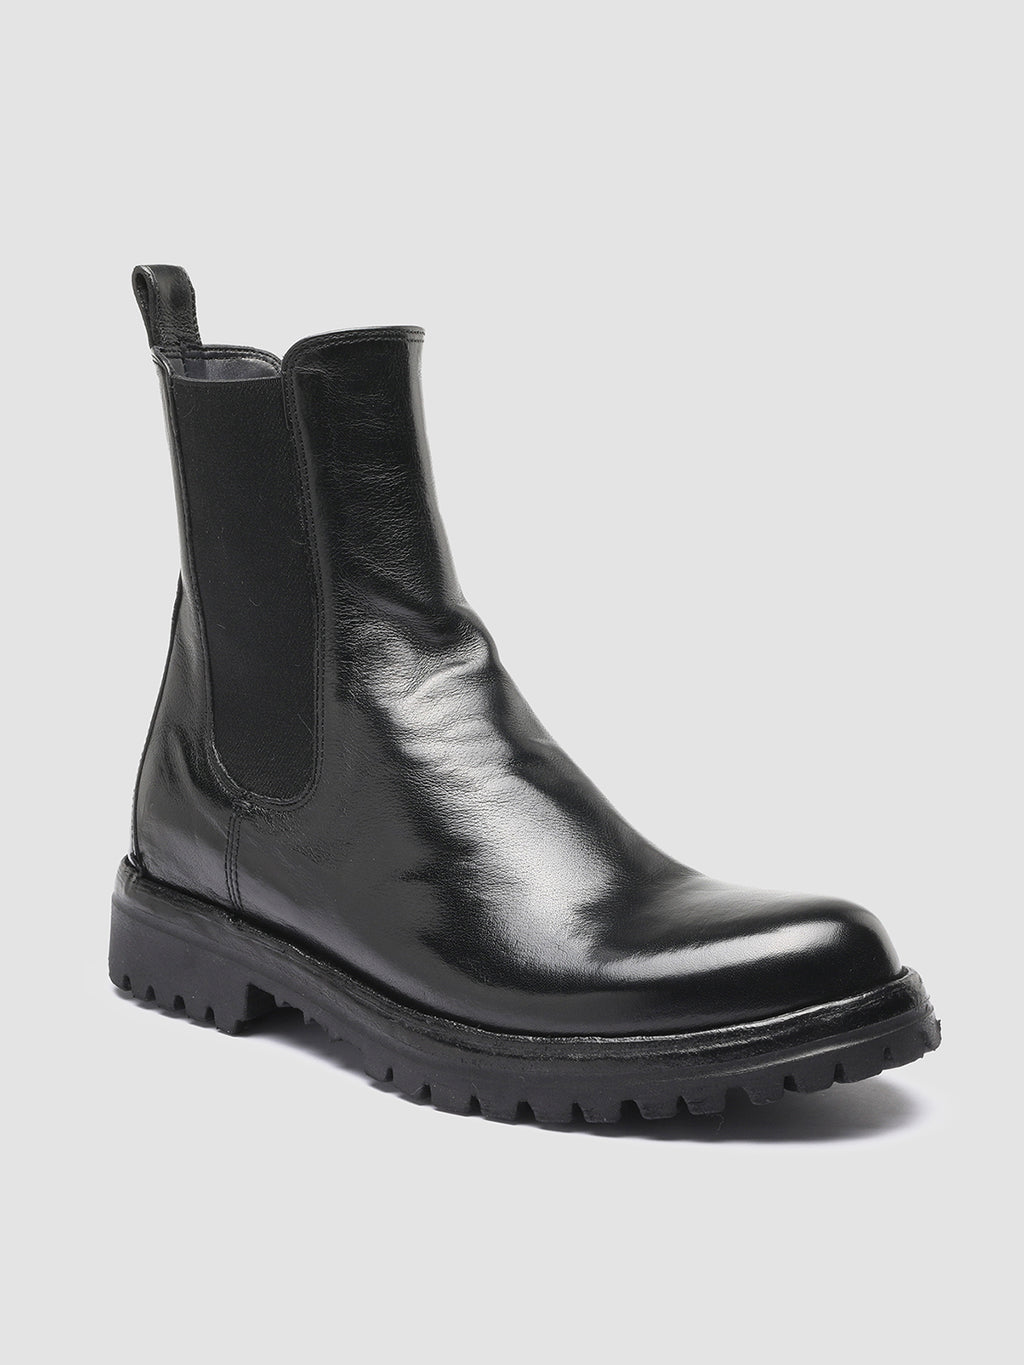 LORAINE 004 Nero - Black Leather Chelsea Boots Women Officine Creative - 3